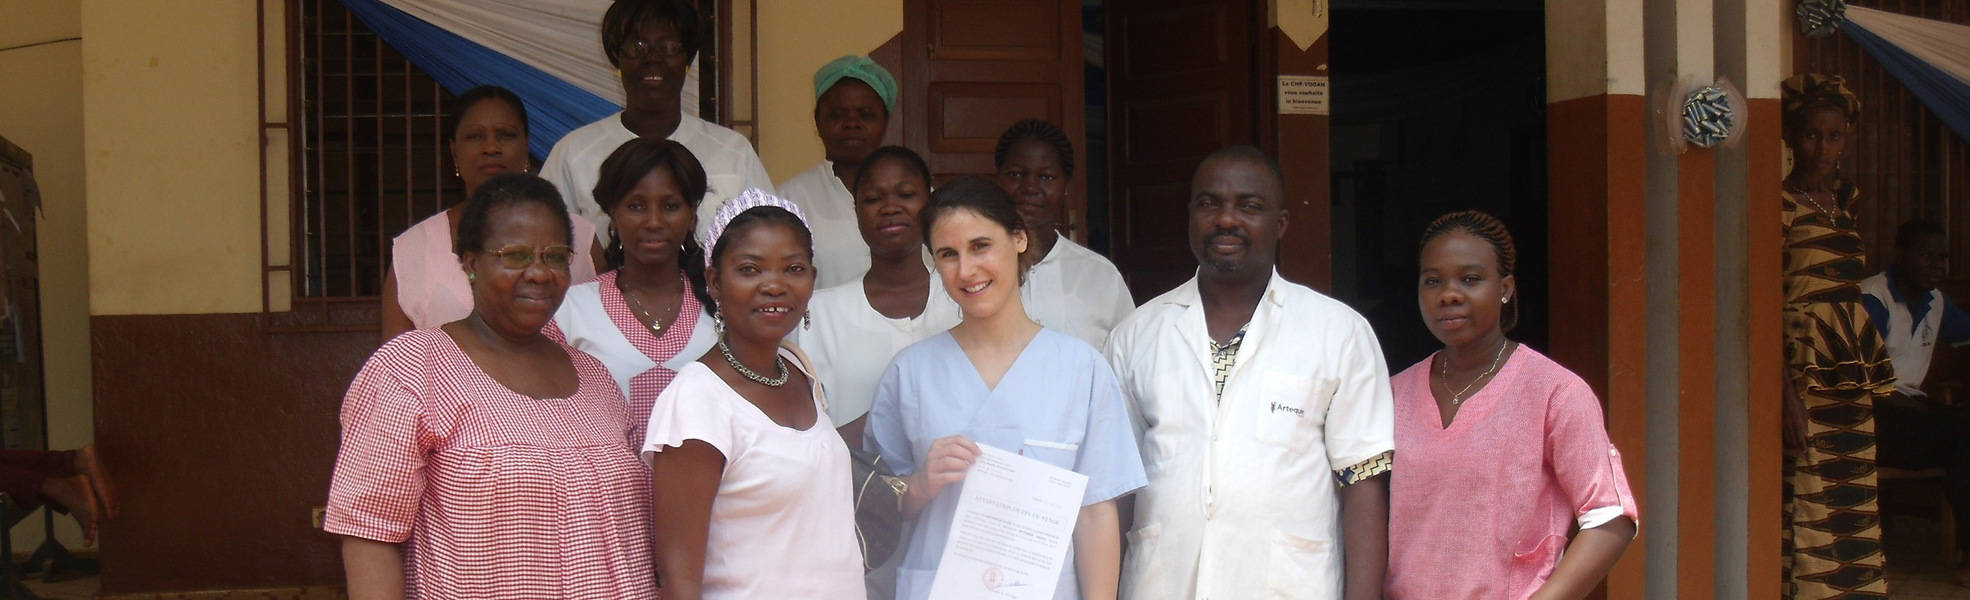 Volunteering in the field of medicine in Ghana